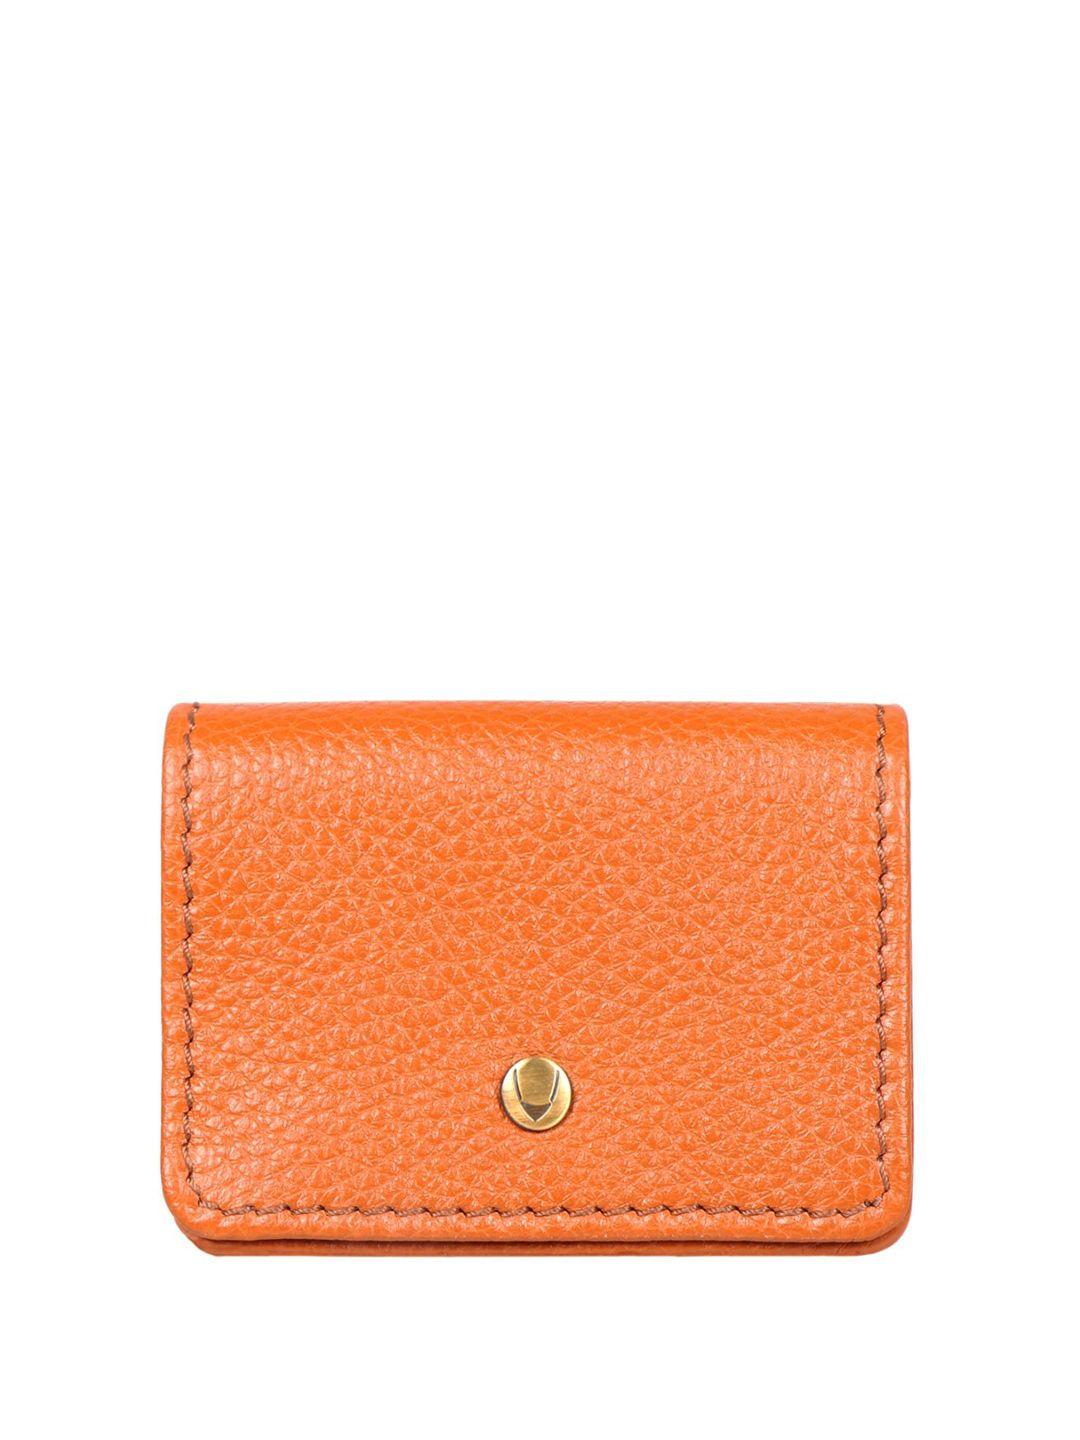 hidesign women leather envelope wallet